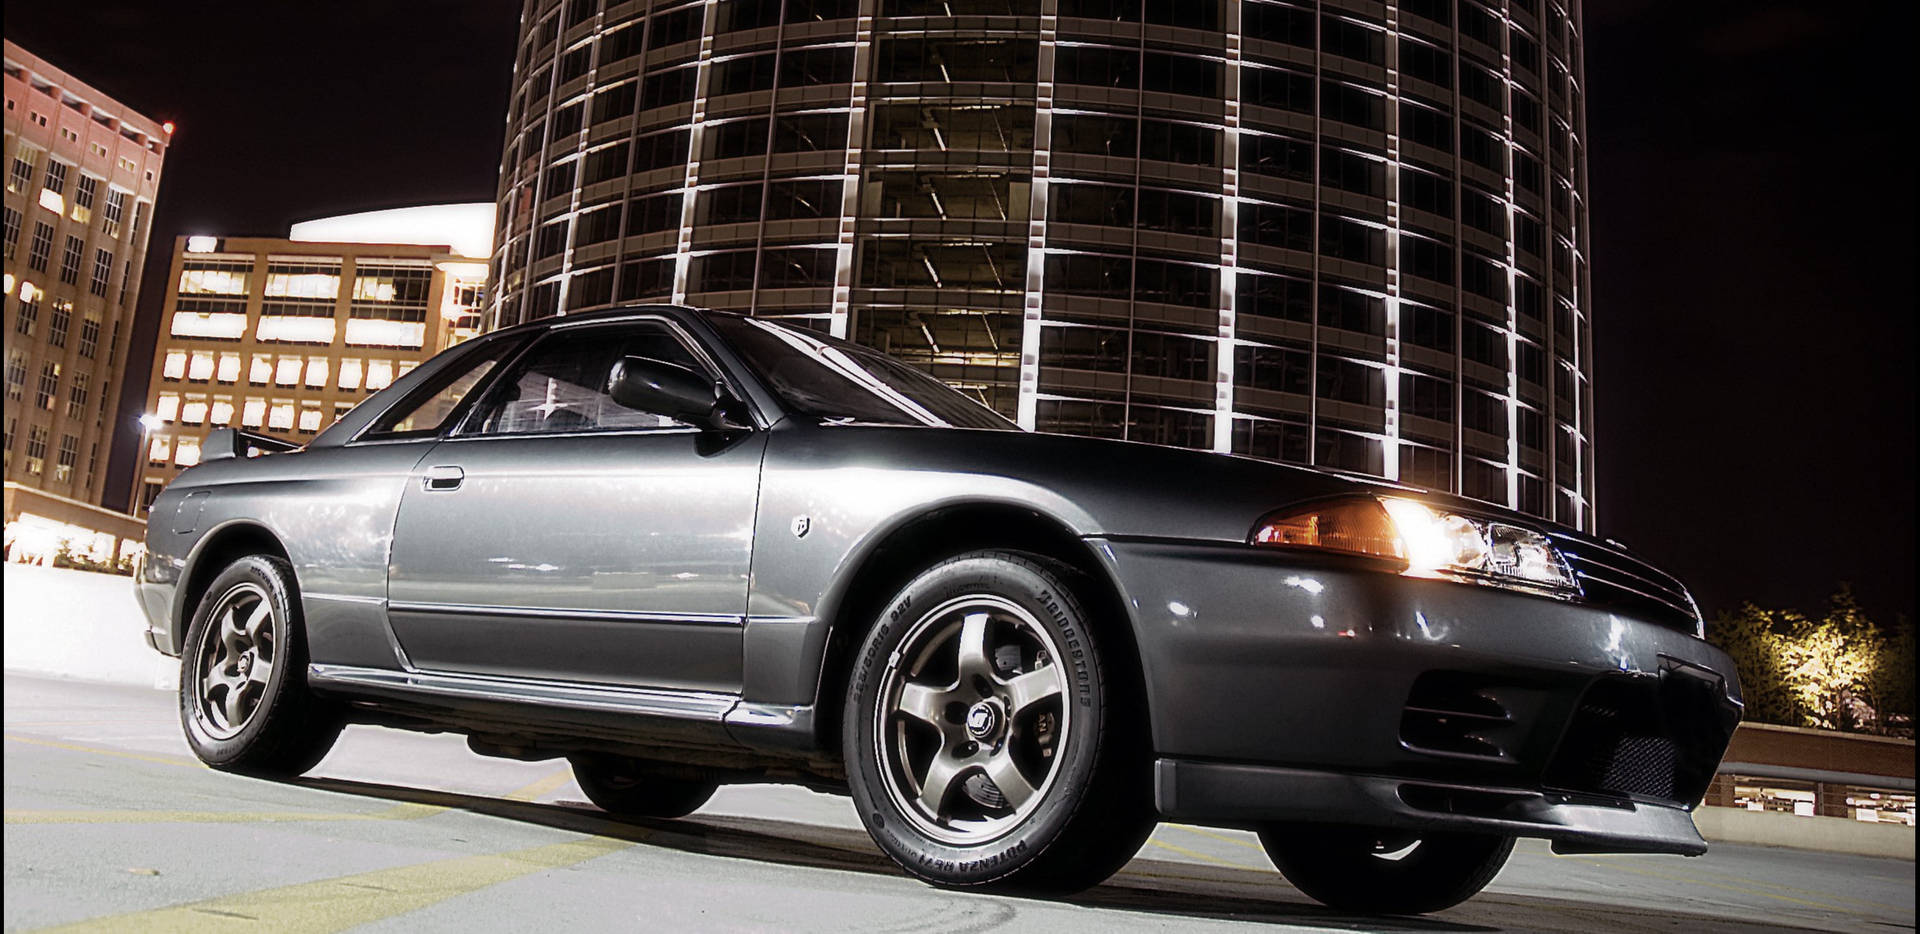 Captivating Nissan Skyline Gtr R33- Powerhouse Of Speed And Elegance Background